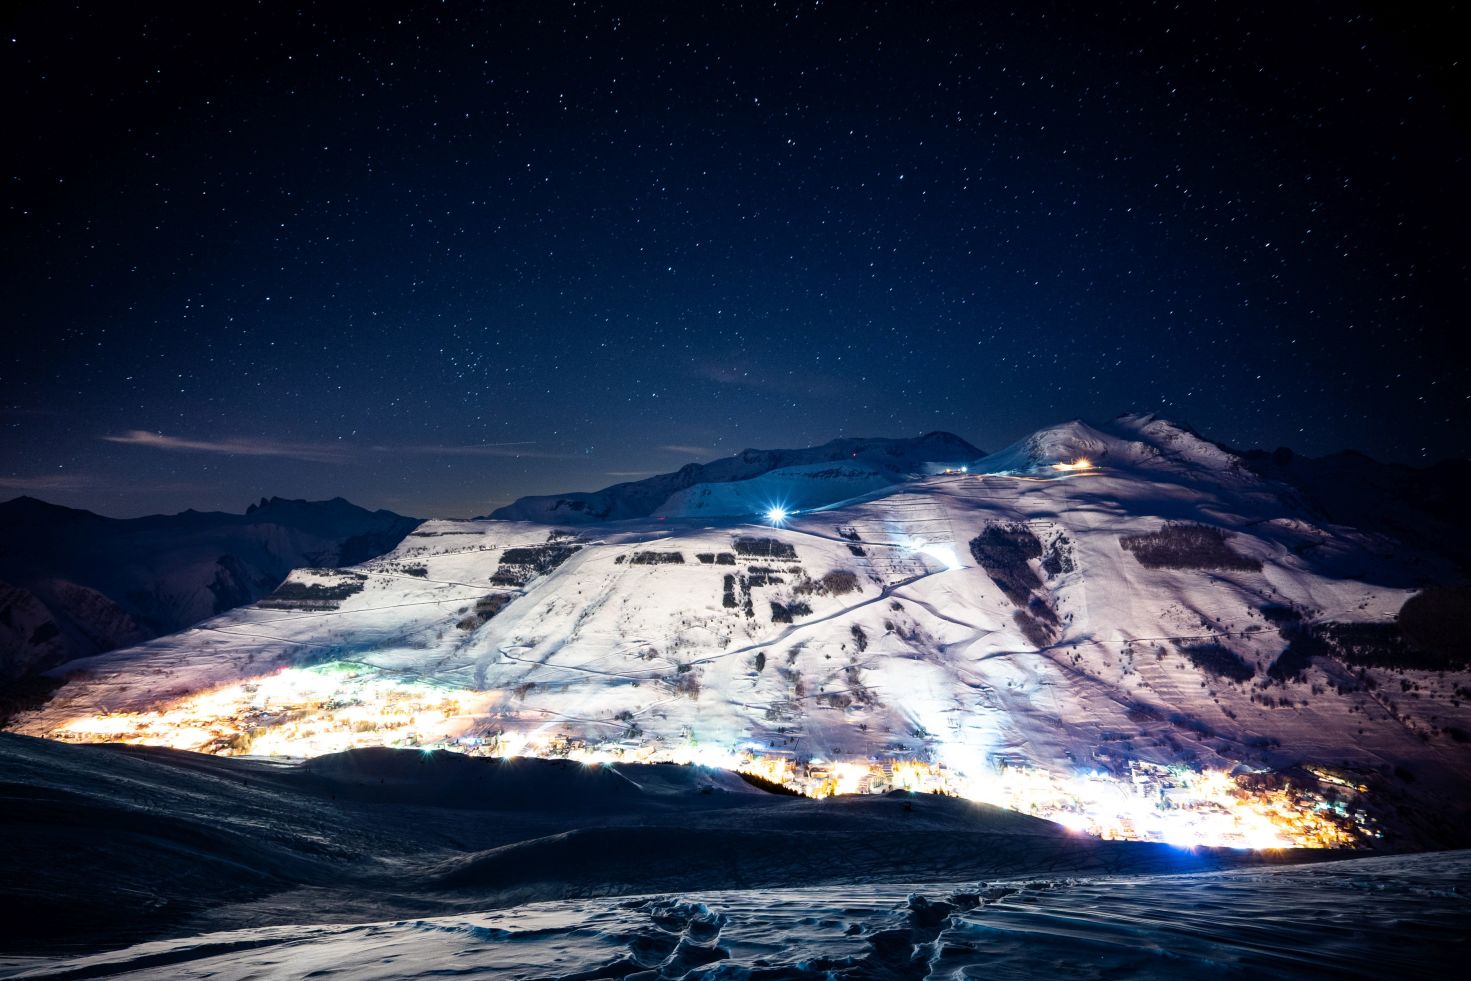 Les Deux Alpes at night